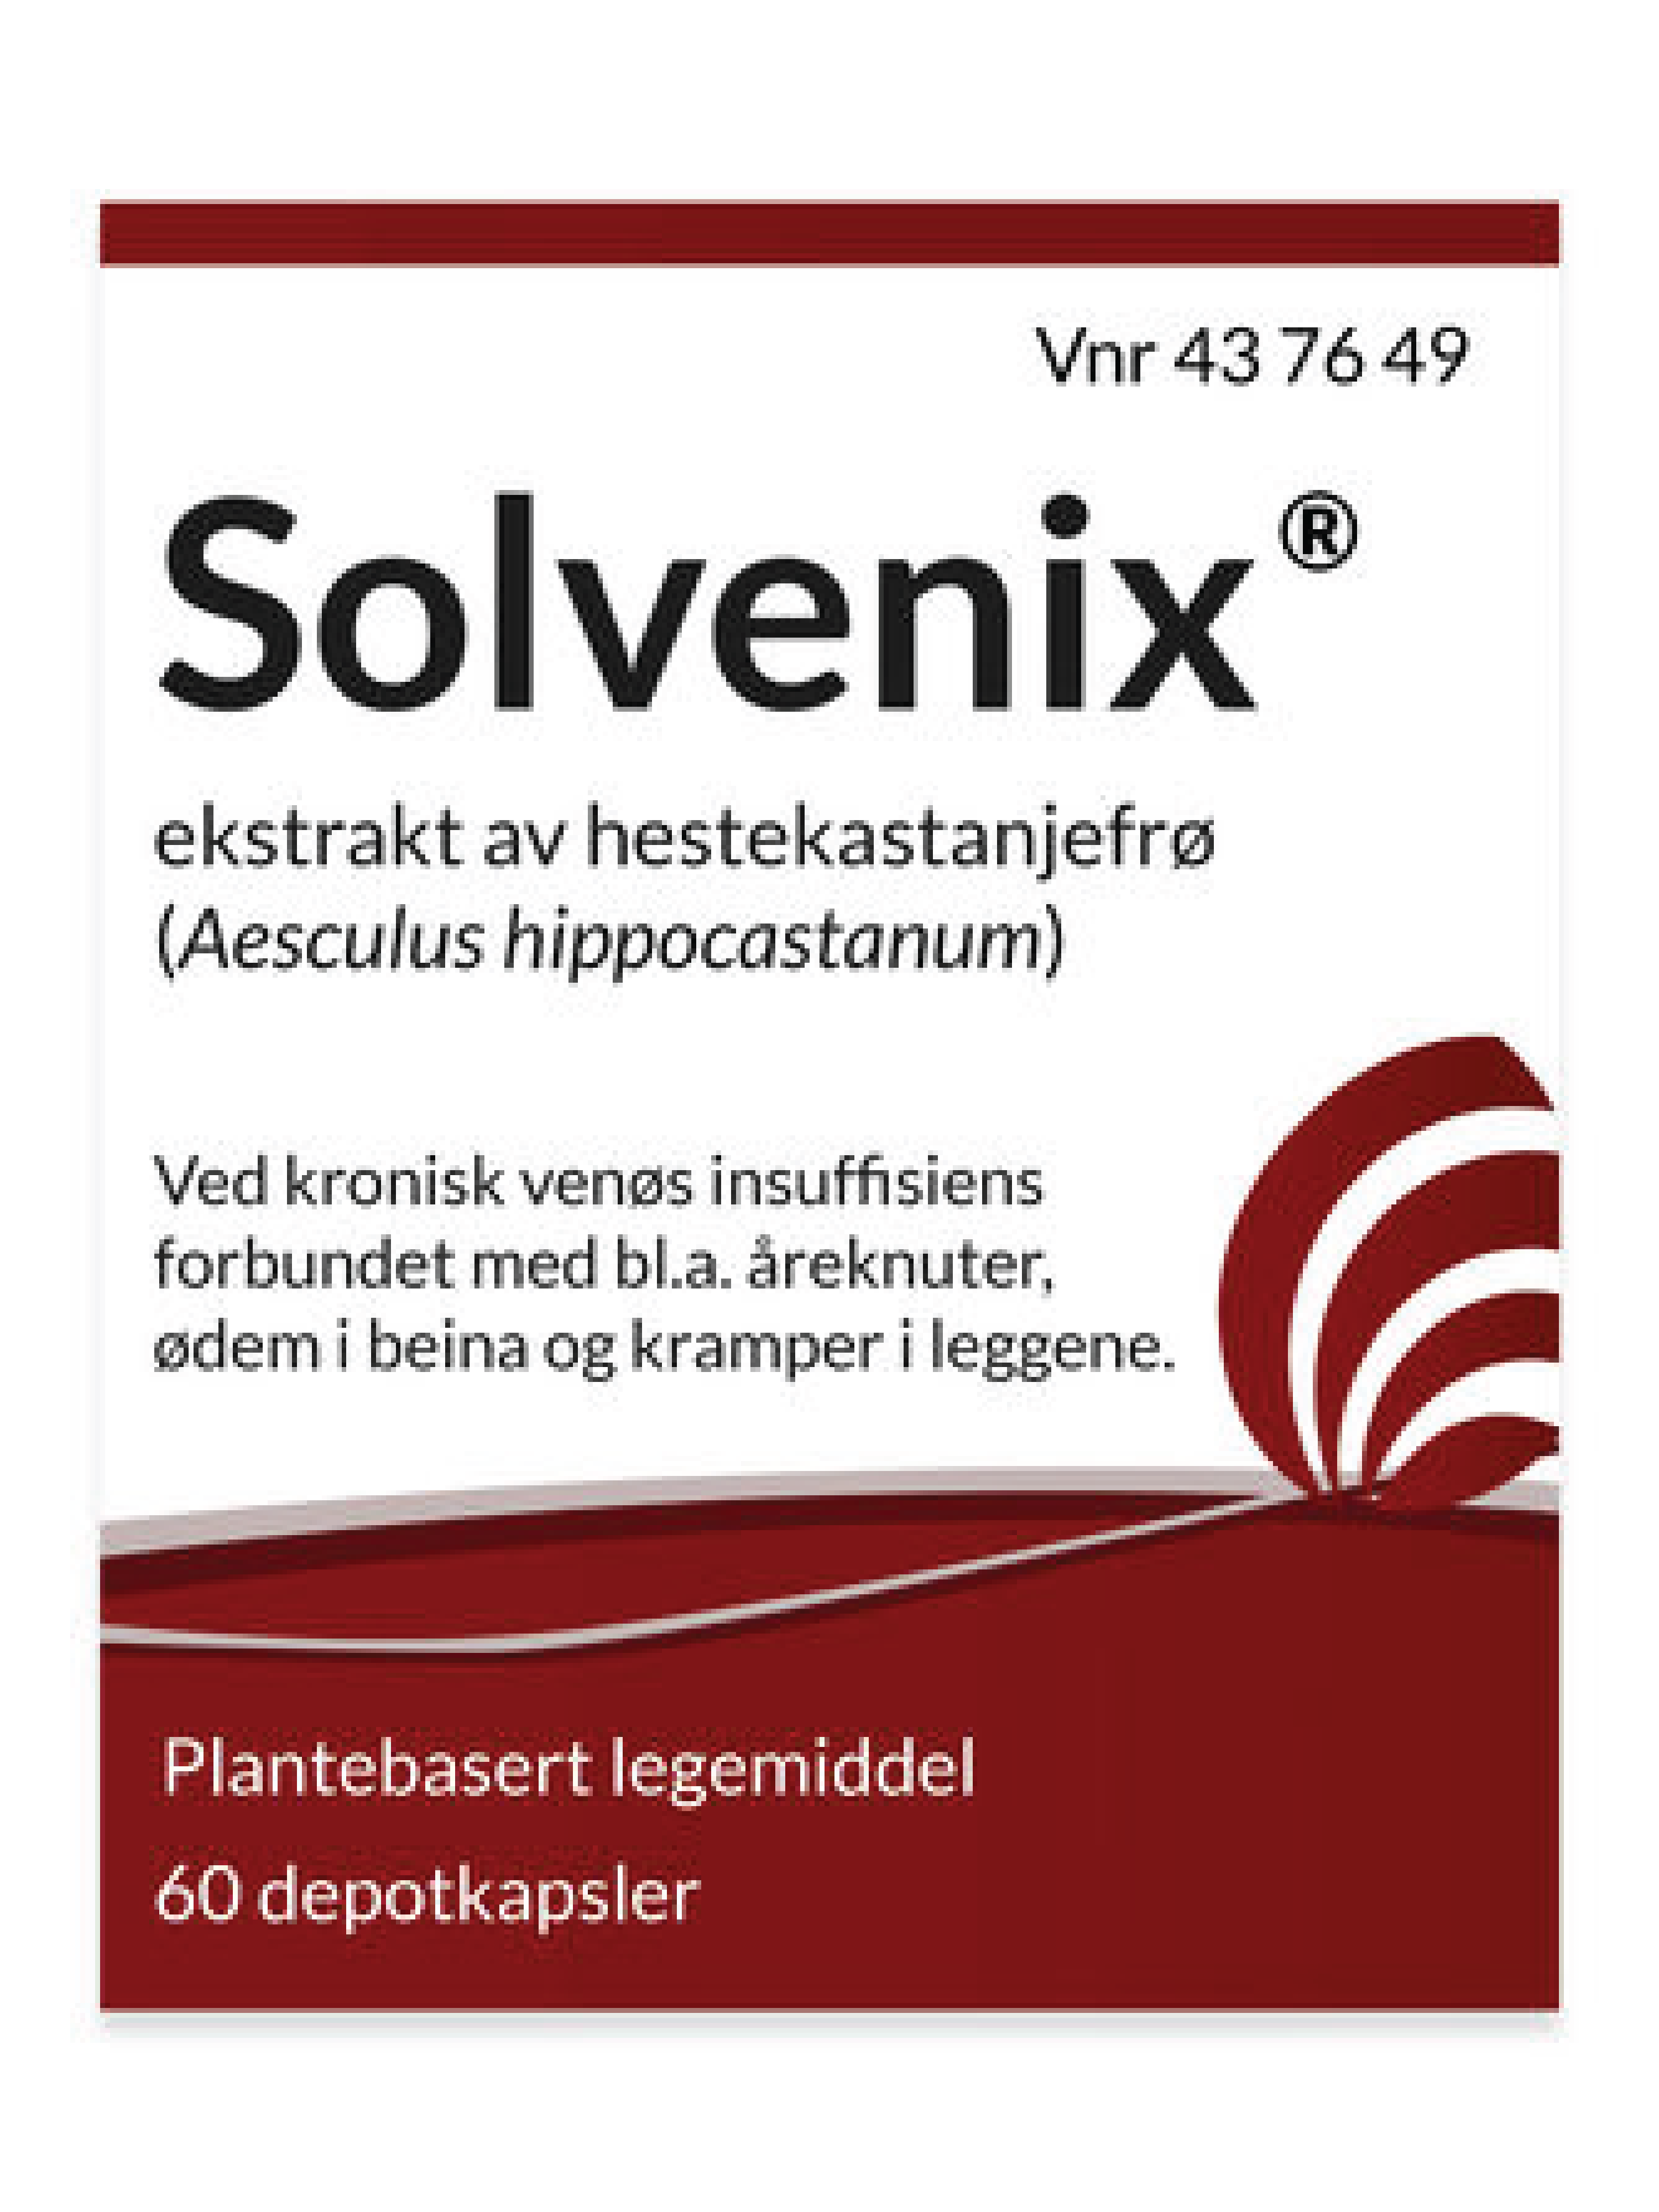 Solvenix 50 mg depotkapsler, 60 stk.